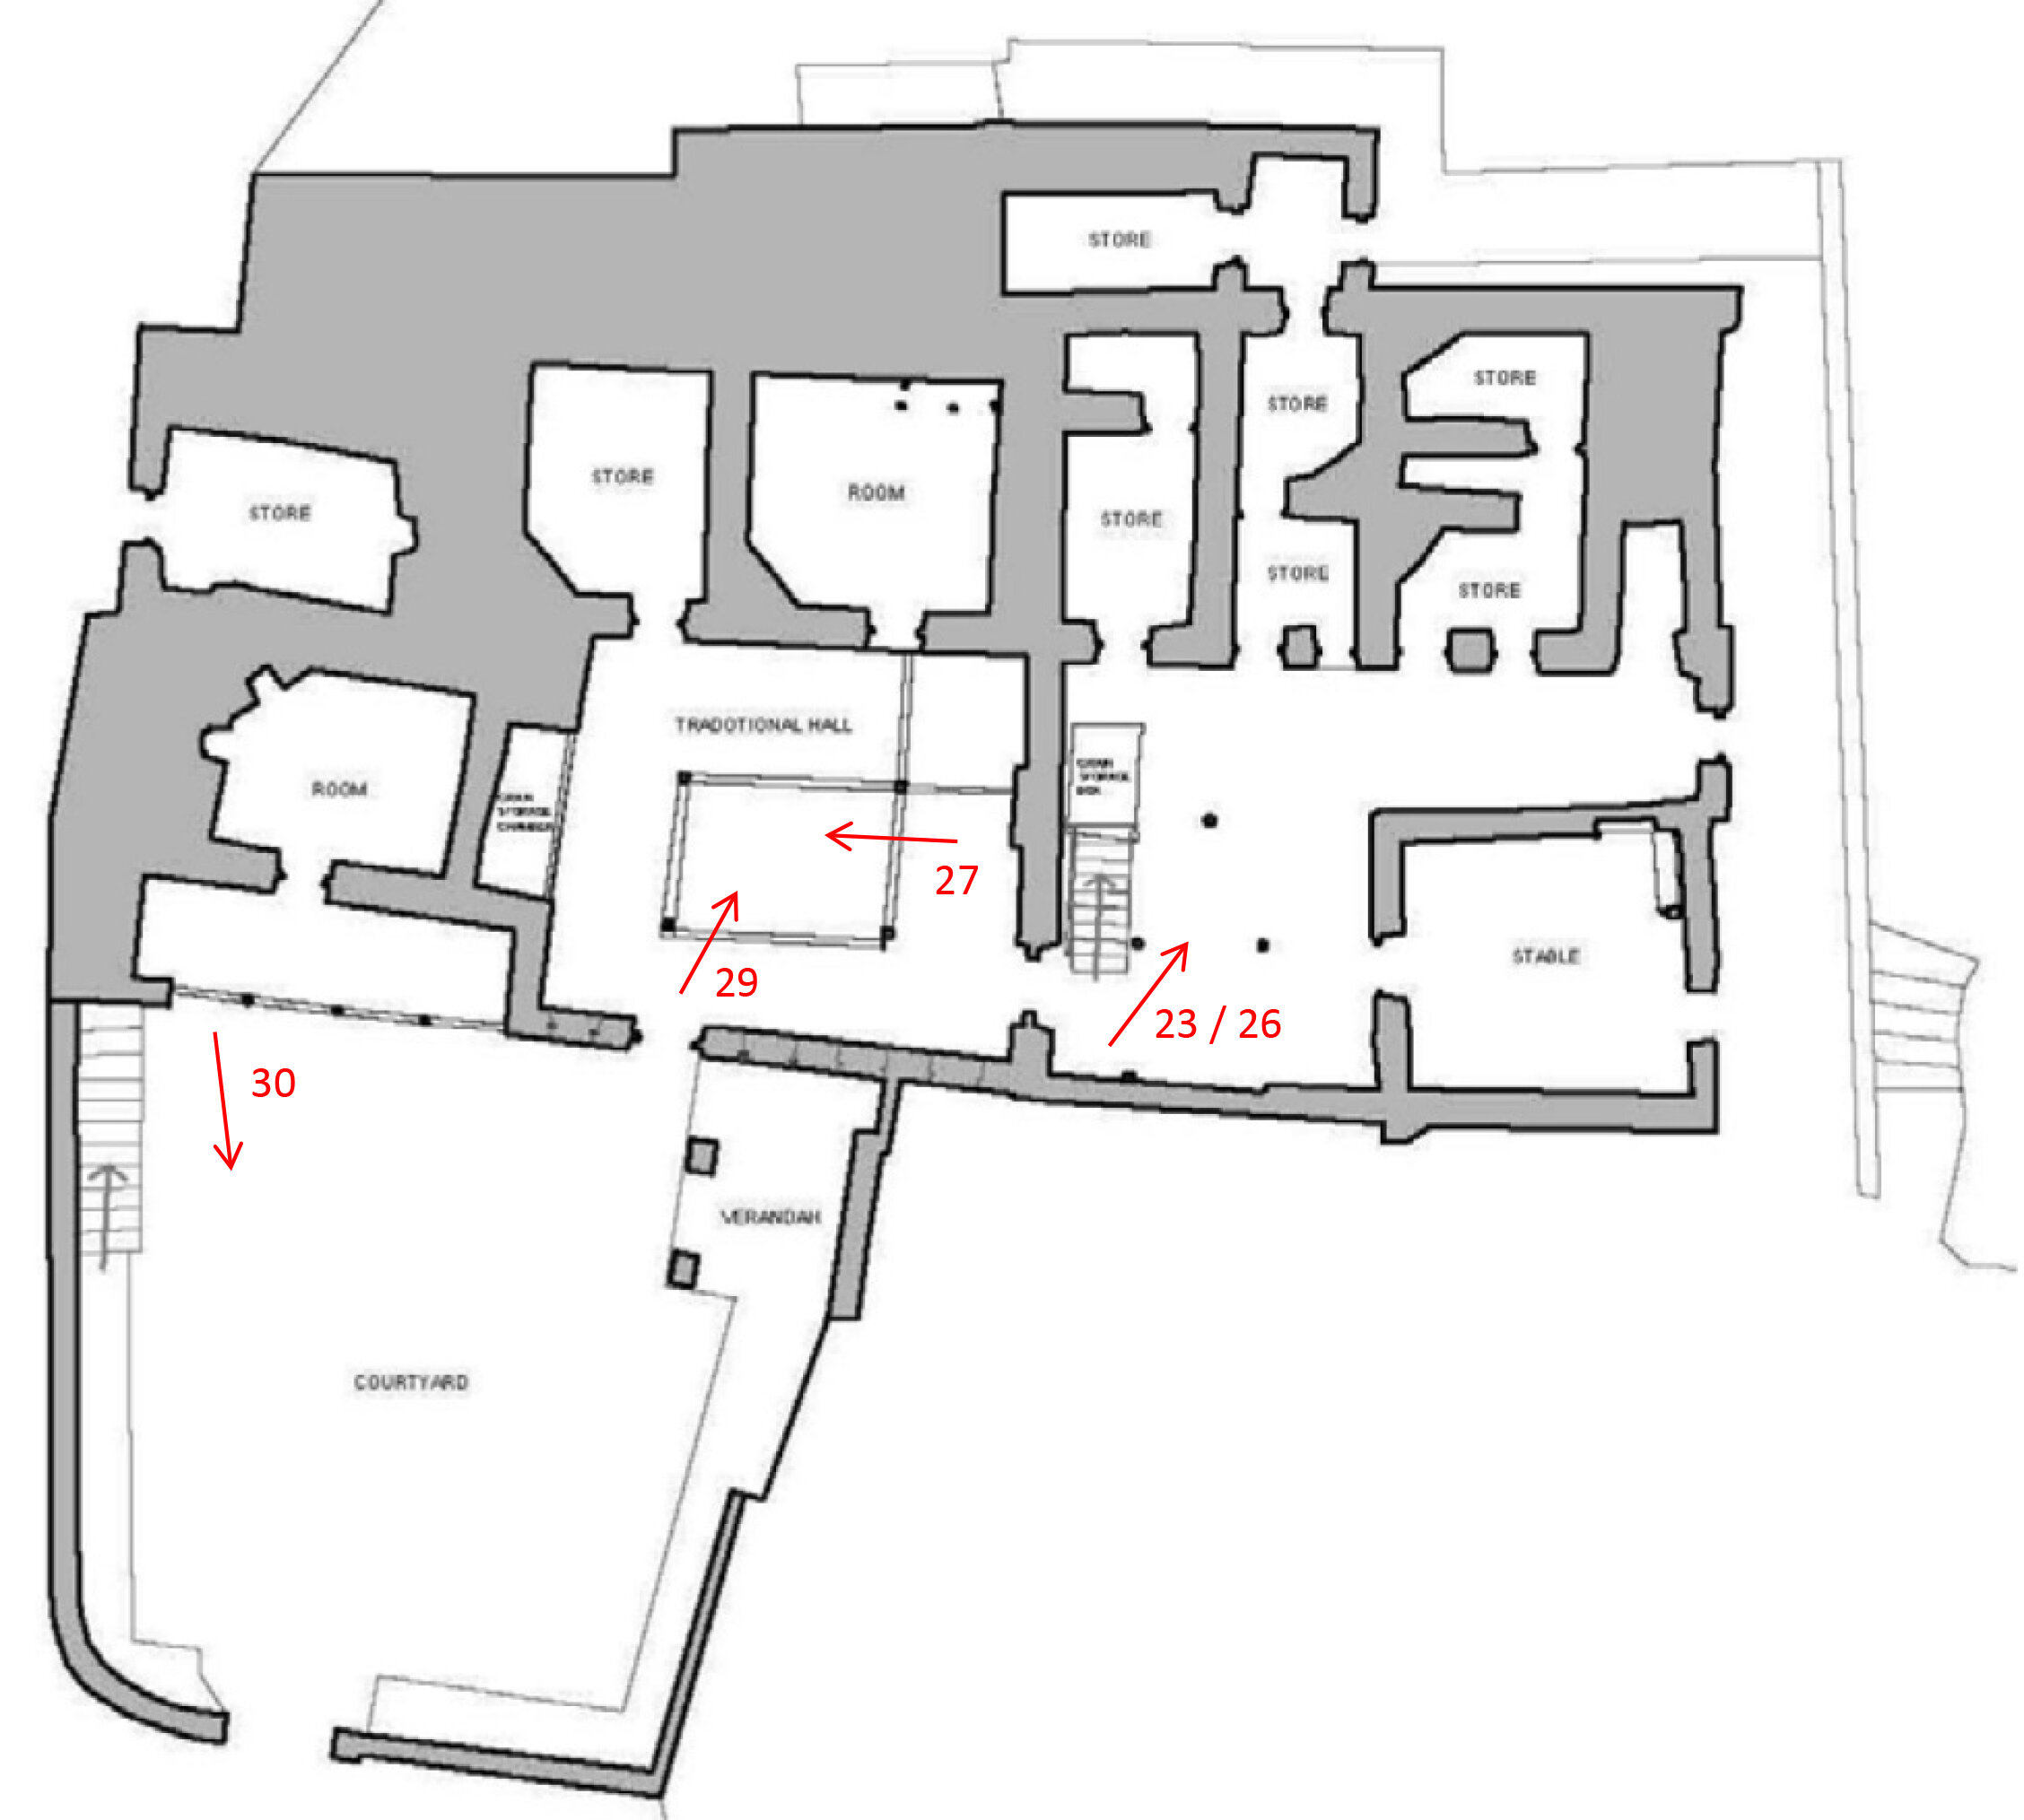 Mir's Winter Palace Gulmit_ground floor plan with arrows.jpg